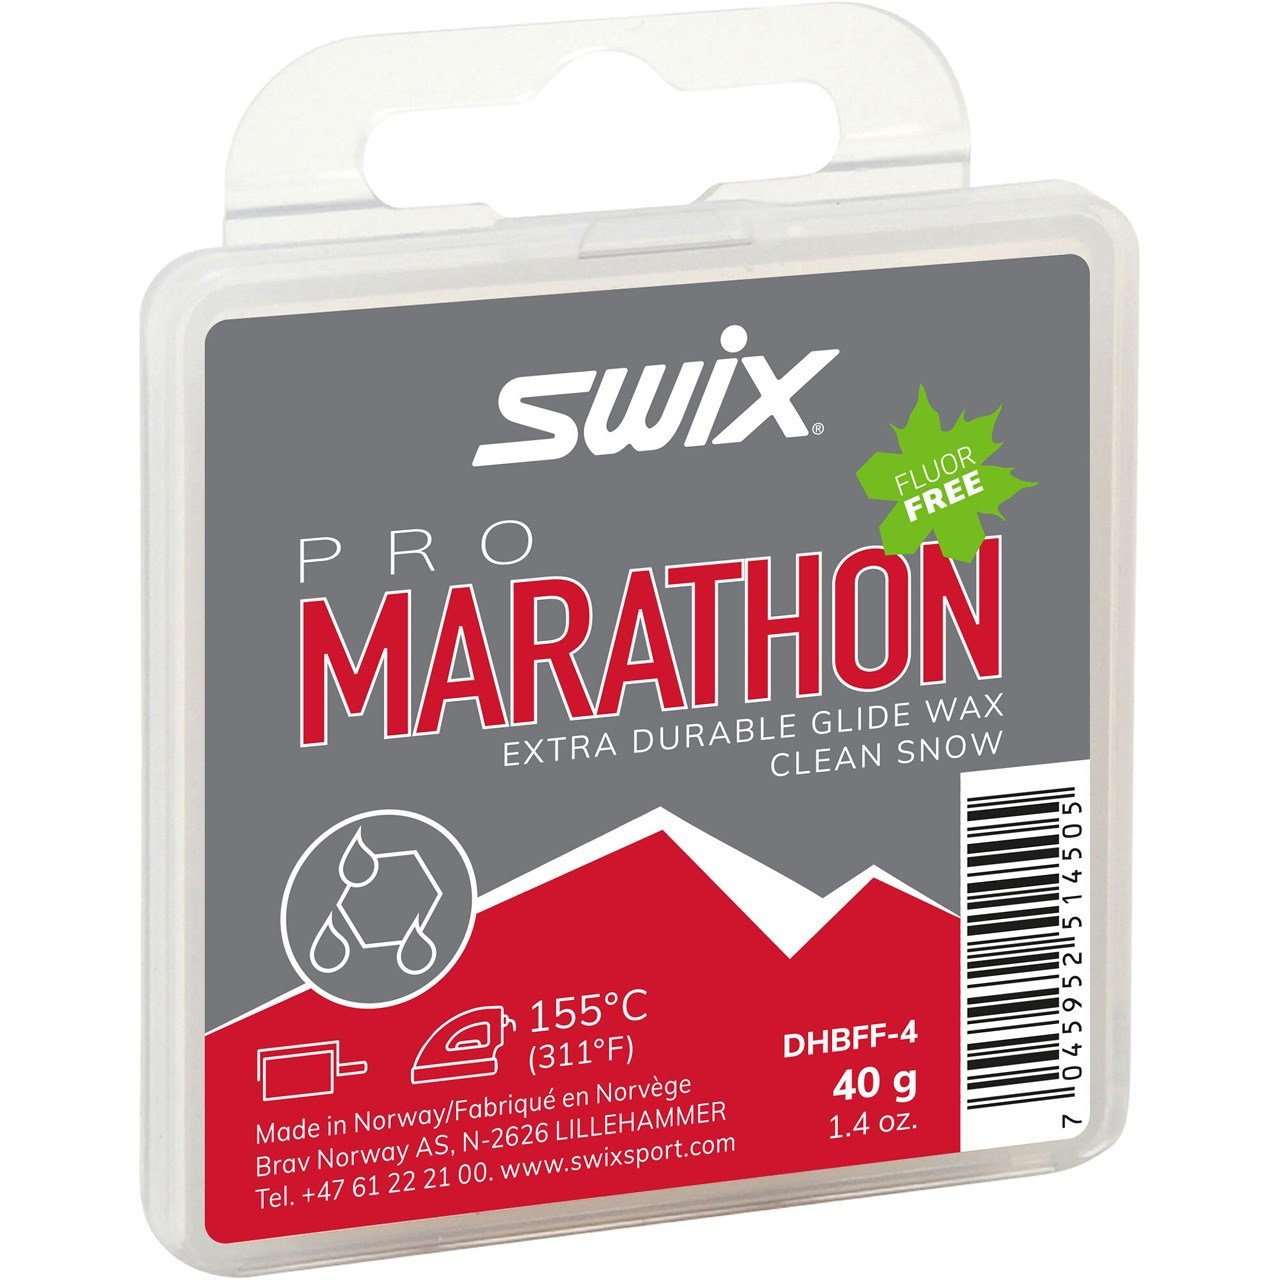 Swix DHBFF-4 Marathon PRO 40 g